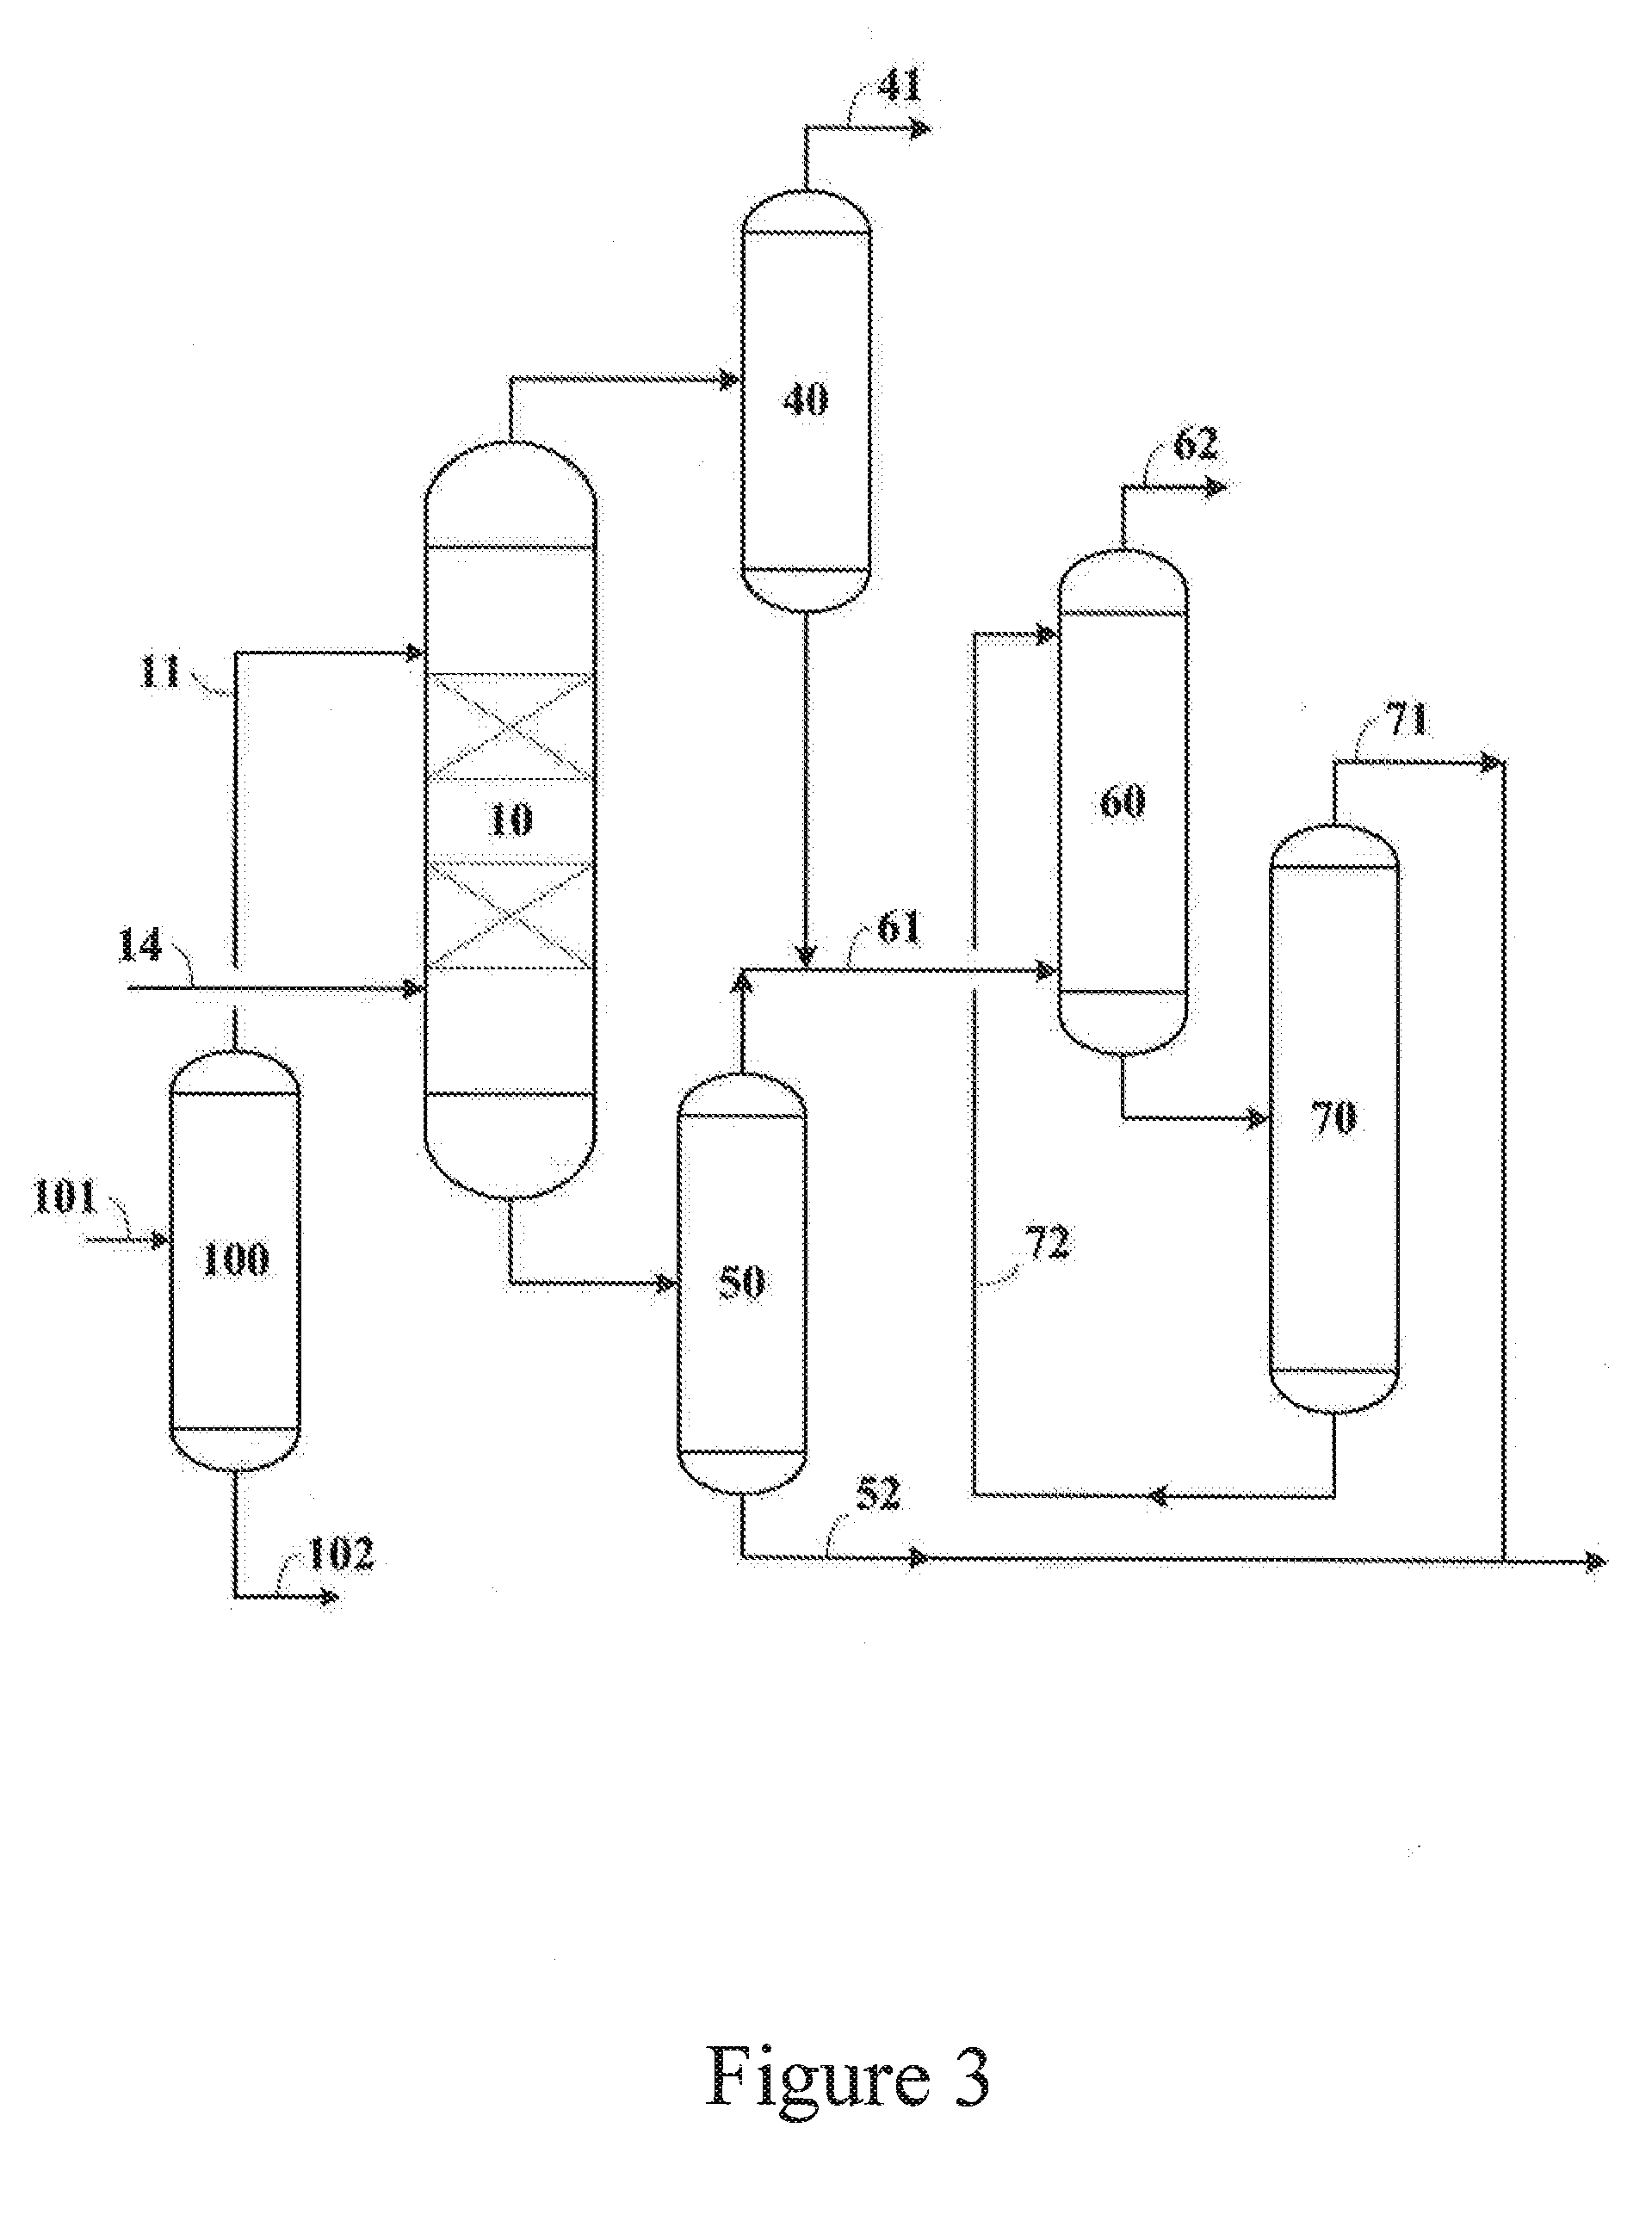 Method for coproducing isobutene and ETBE from tert-Butanol mixture